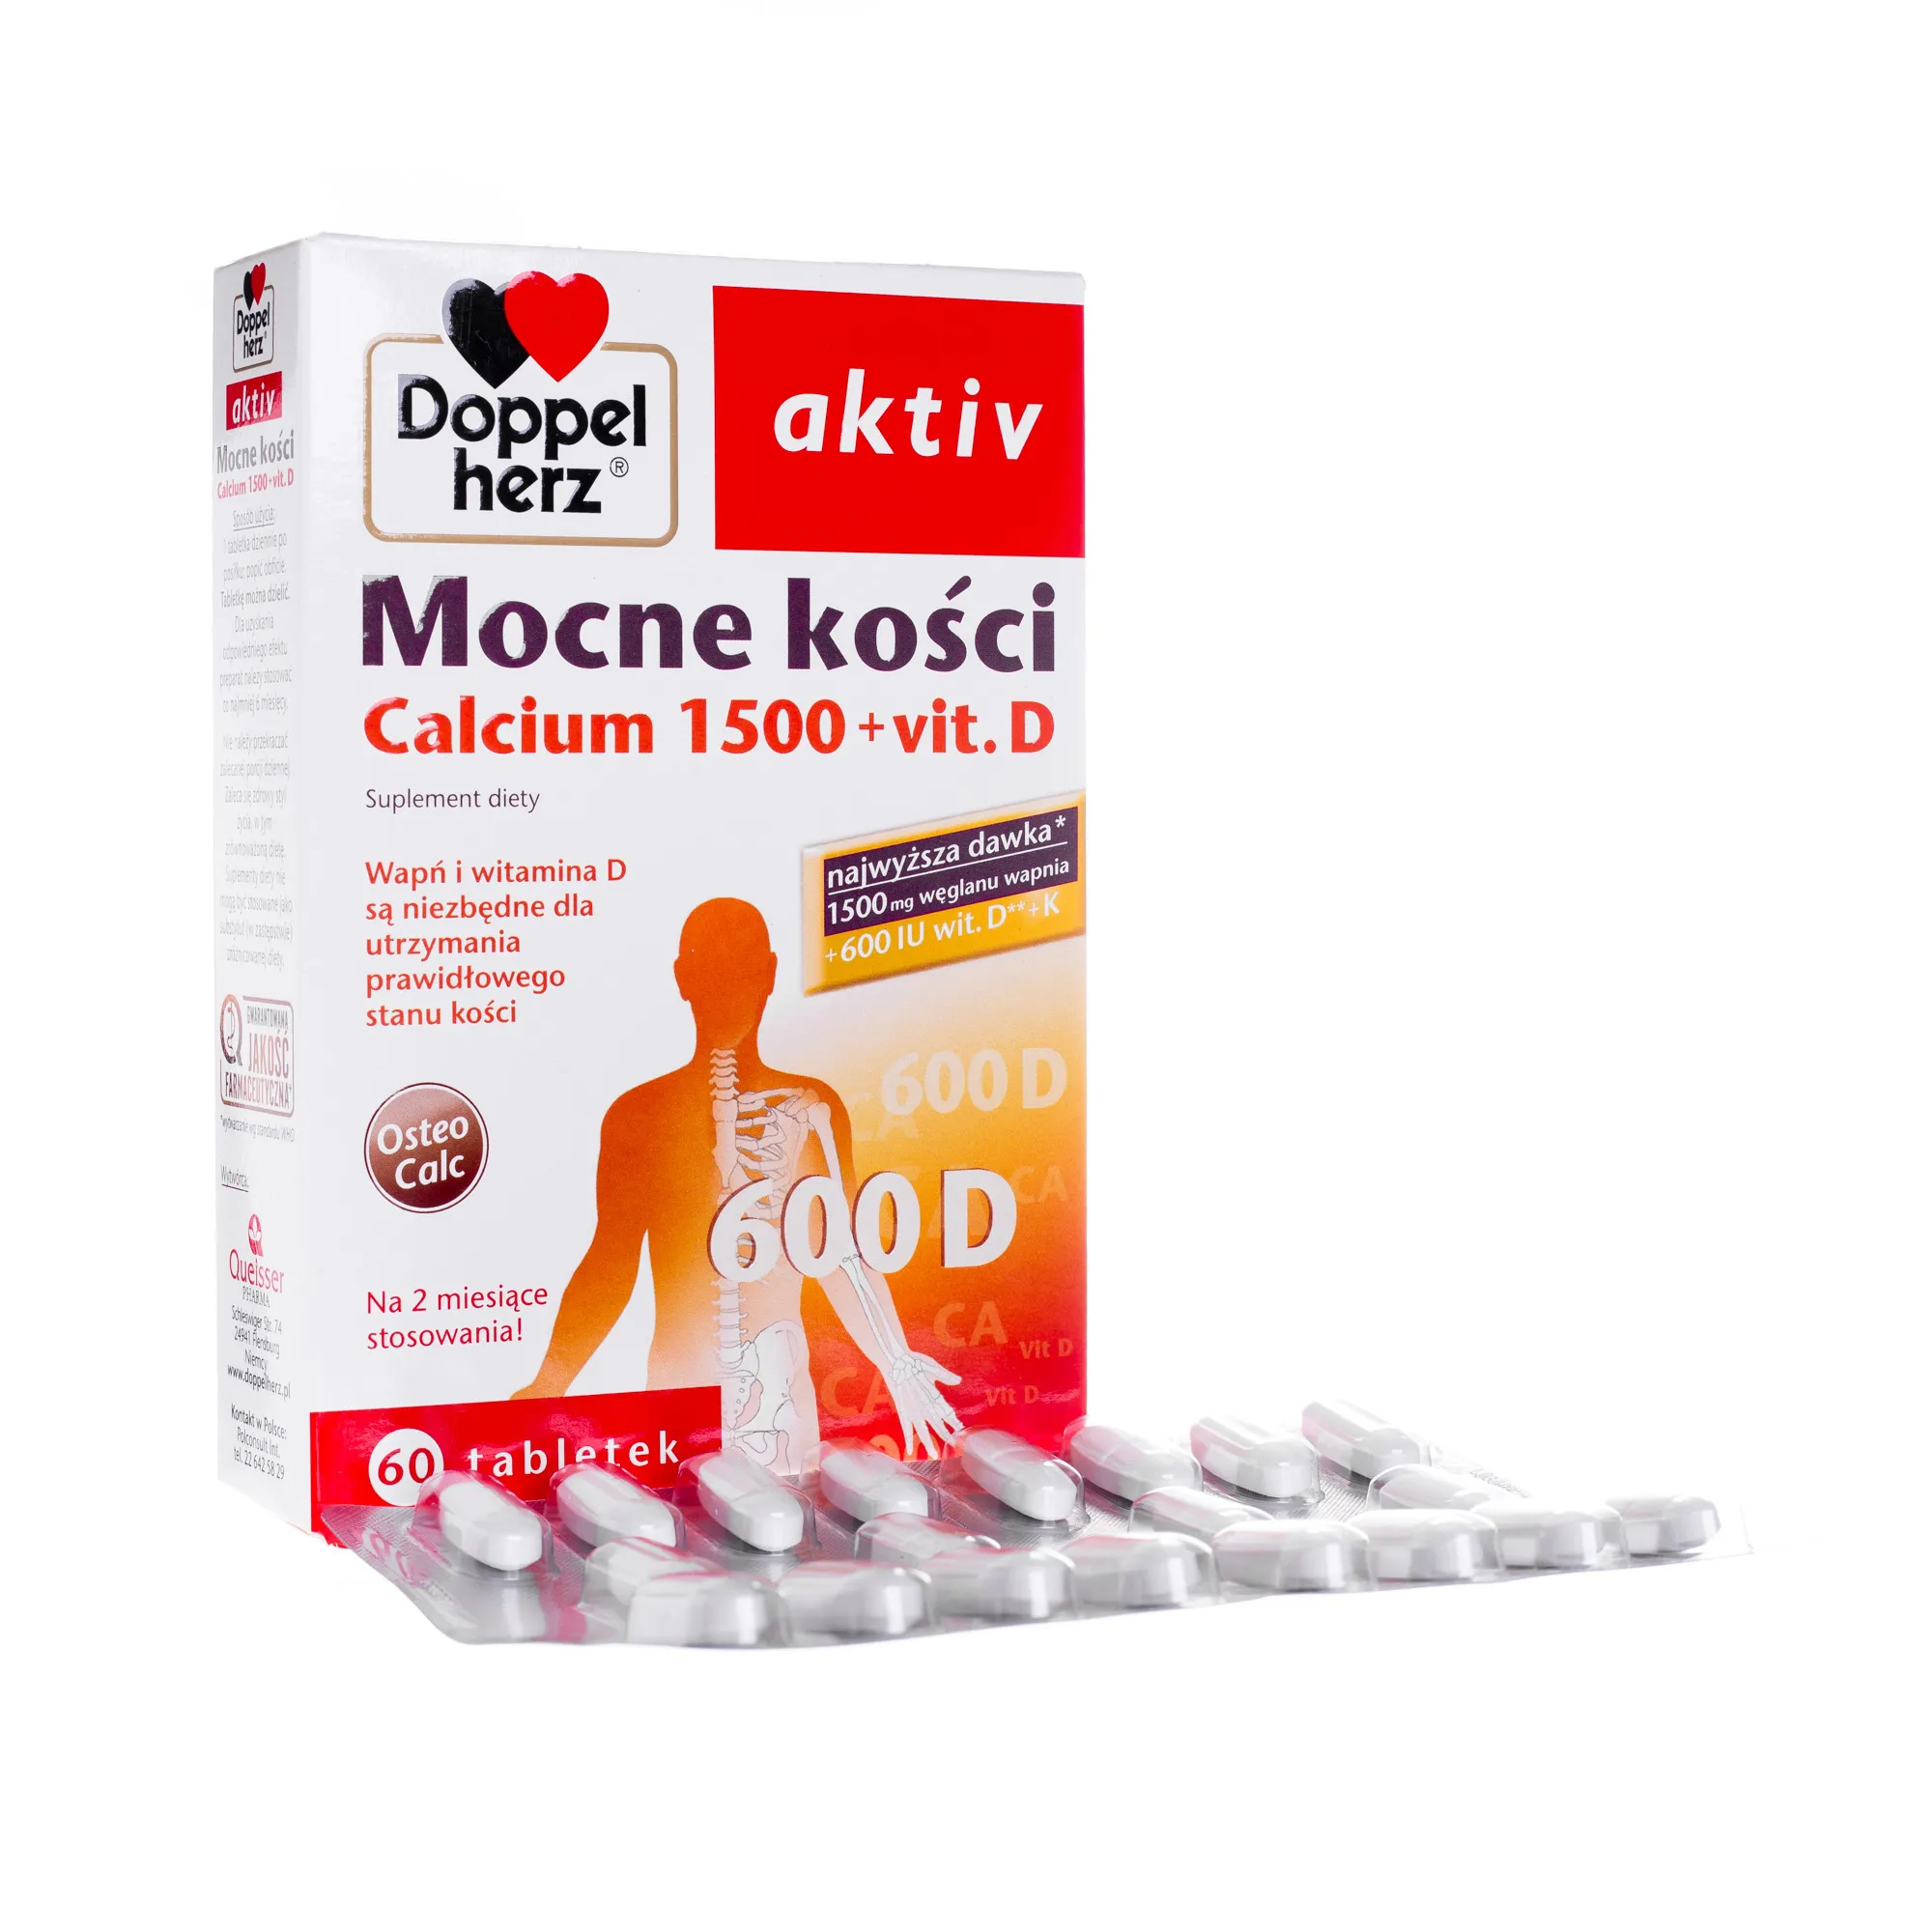 Doppelherz Aktiv, Mocne kości, Calcium 1500 + Vit. D, suplement diety, 60 tabletek